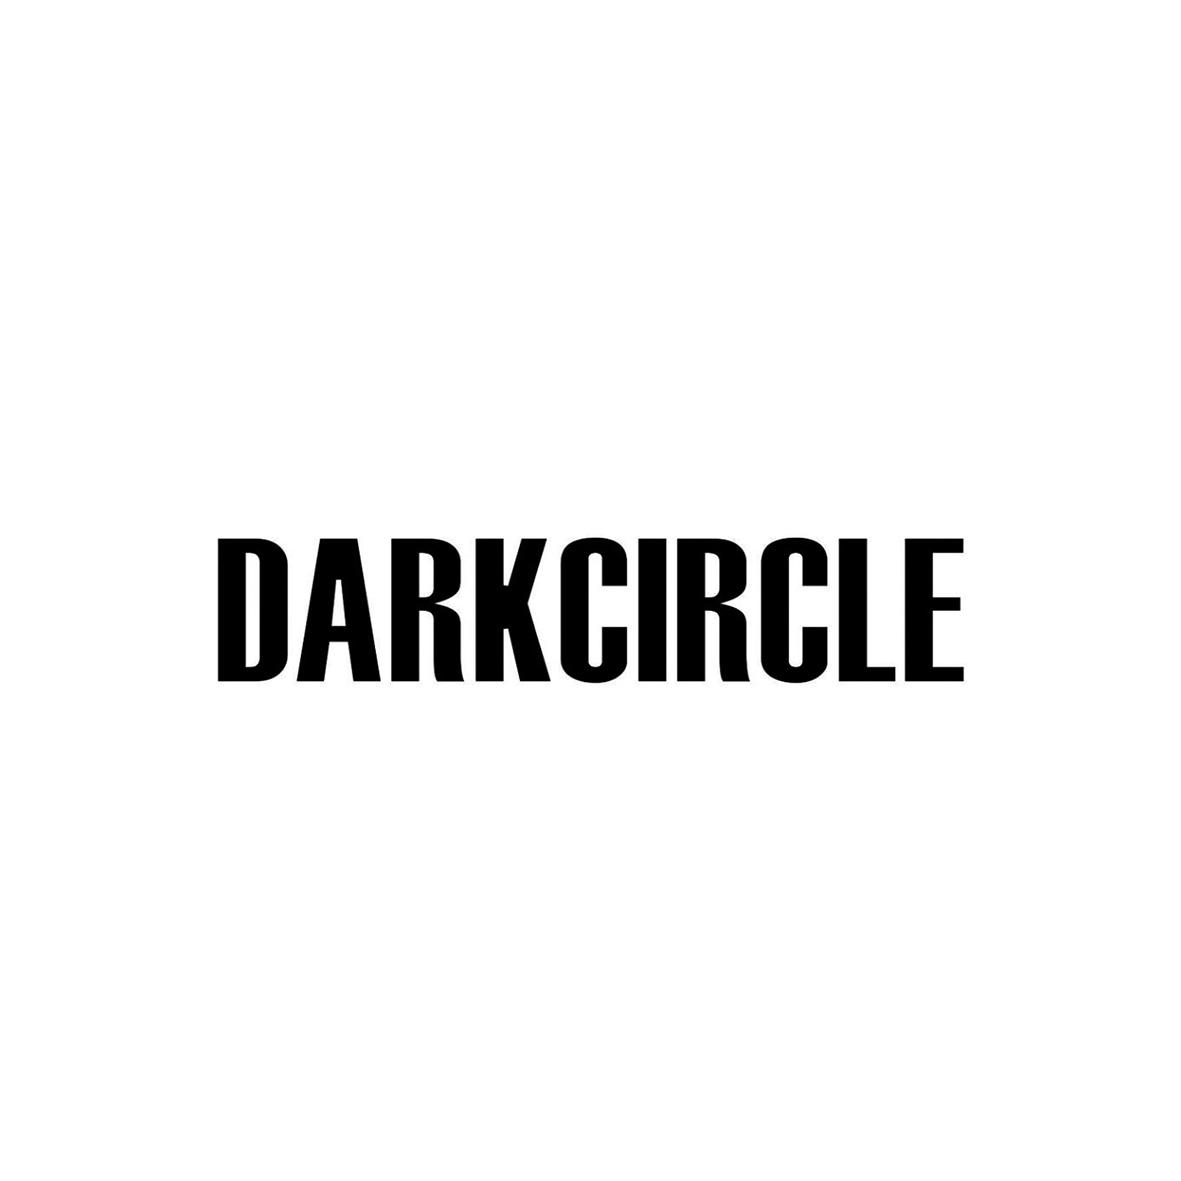 darkcircle 商标公告